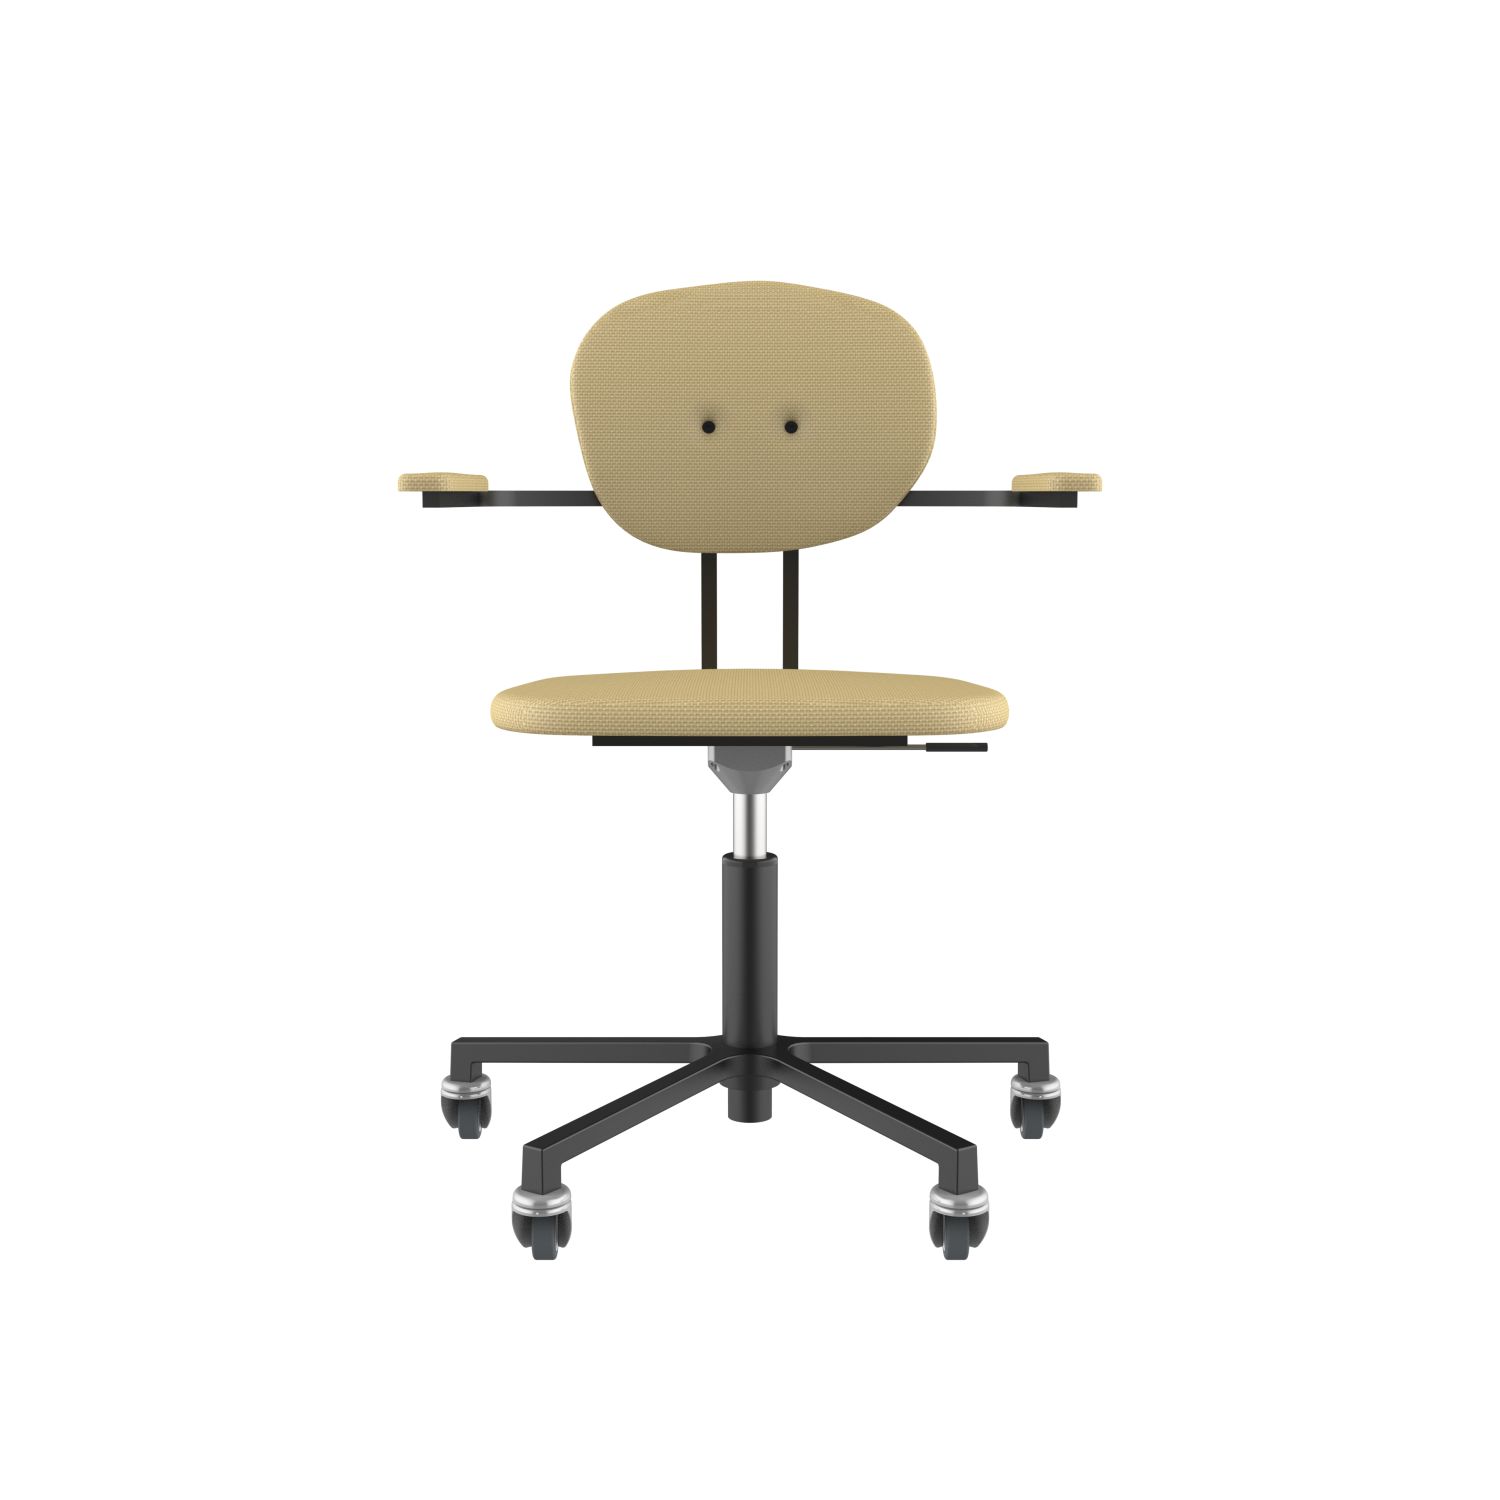 lensvelt maarten baas office chair with armrests backrest a light brown 141 black ral9005 soft wheels